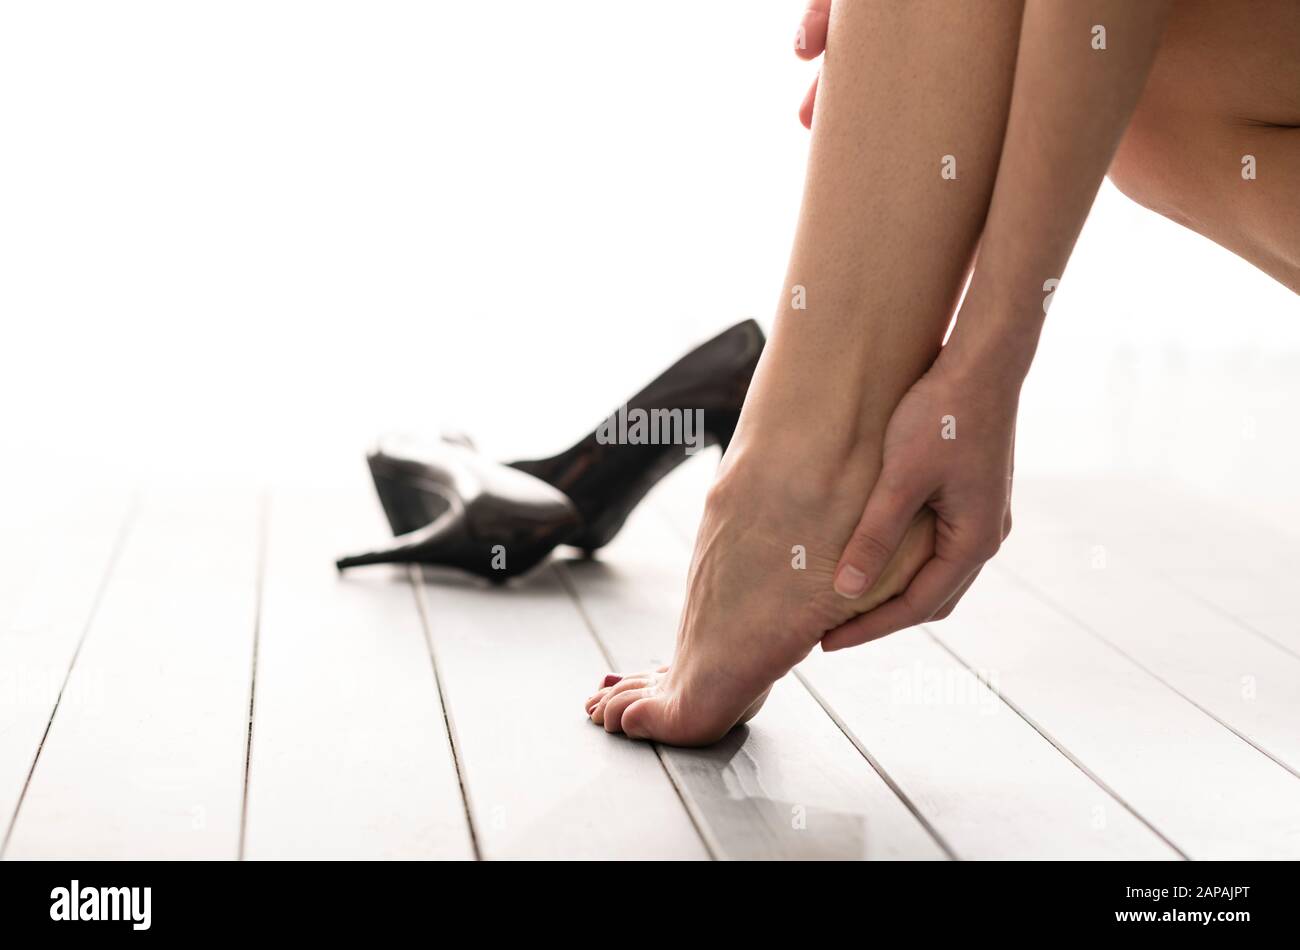 Barefoot Woman with High Heels on Floor Stock Photo